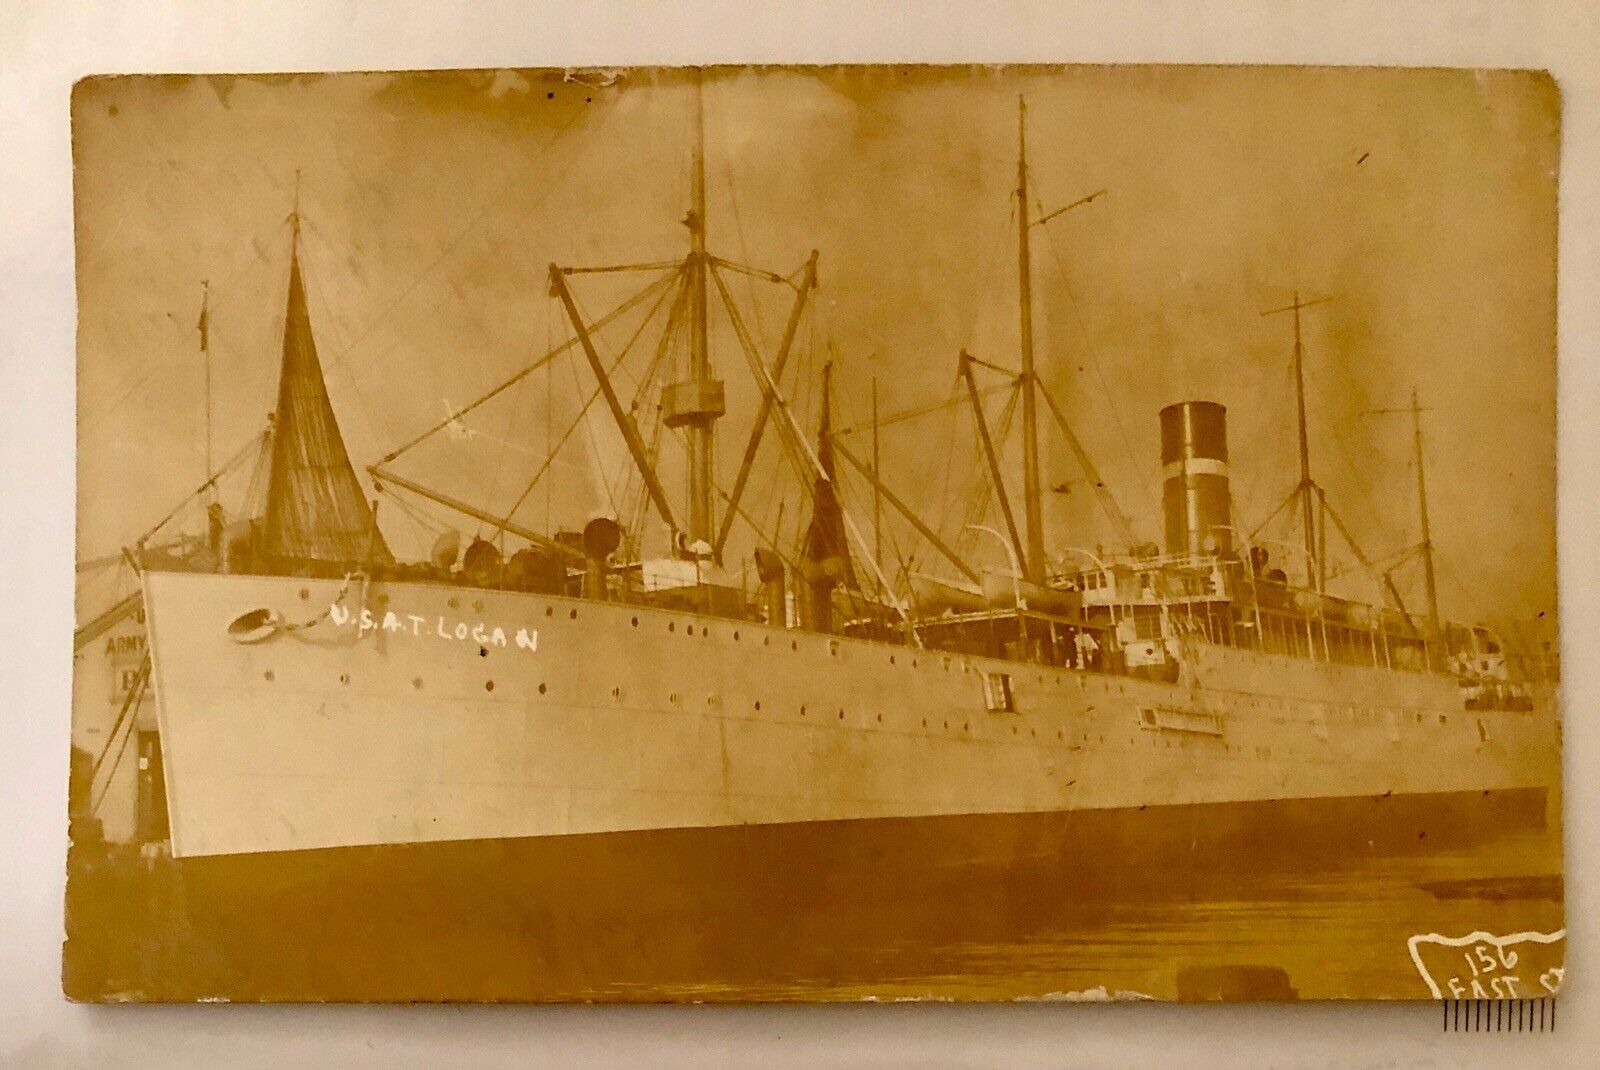 c1910 USAT Logan Army Transport Ship Vintage Postcard RPPC Real Photo